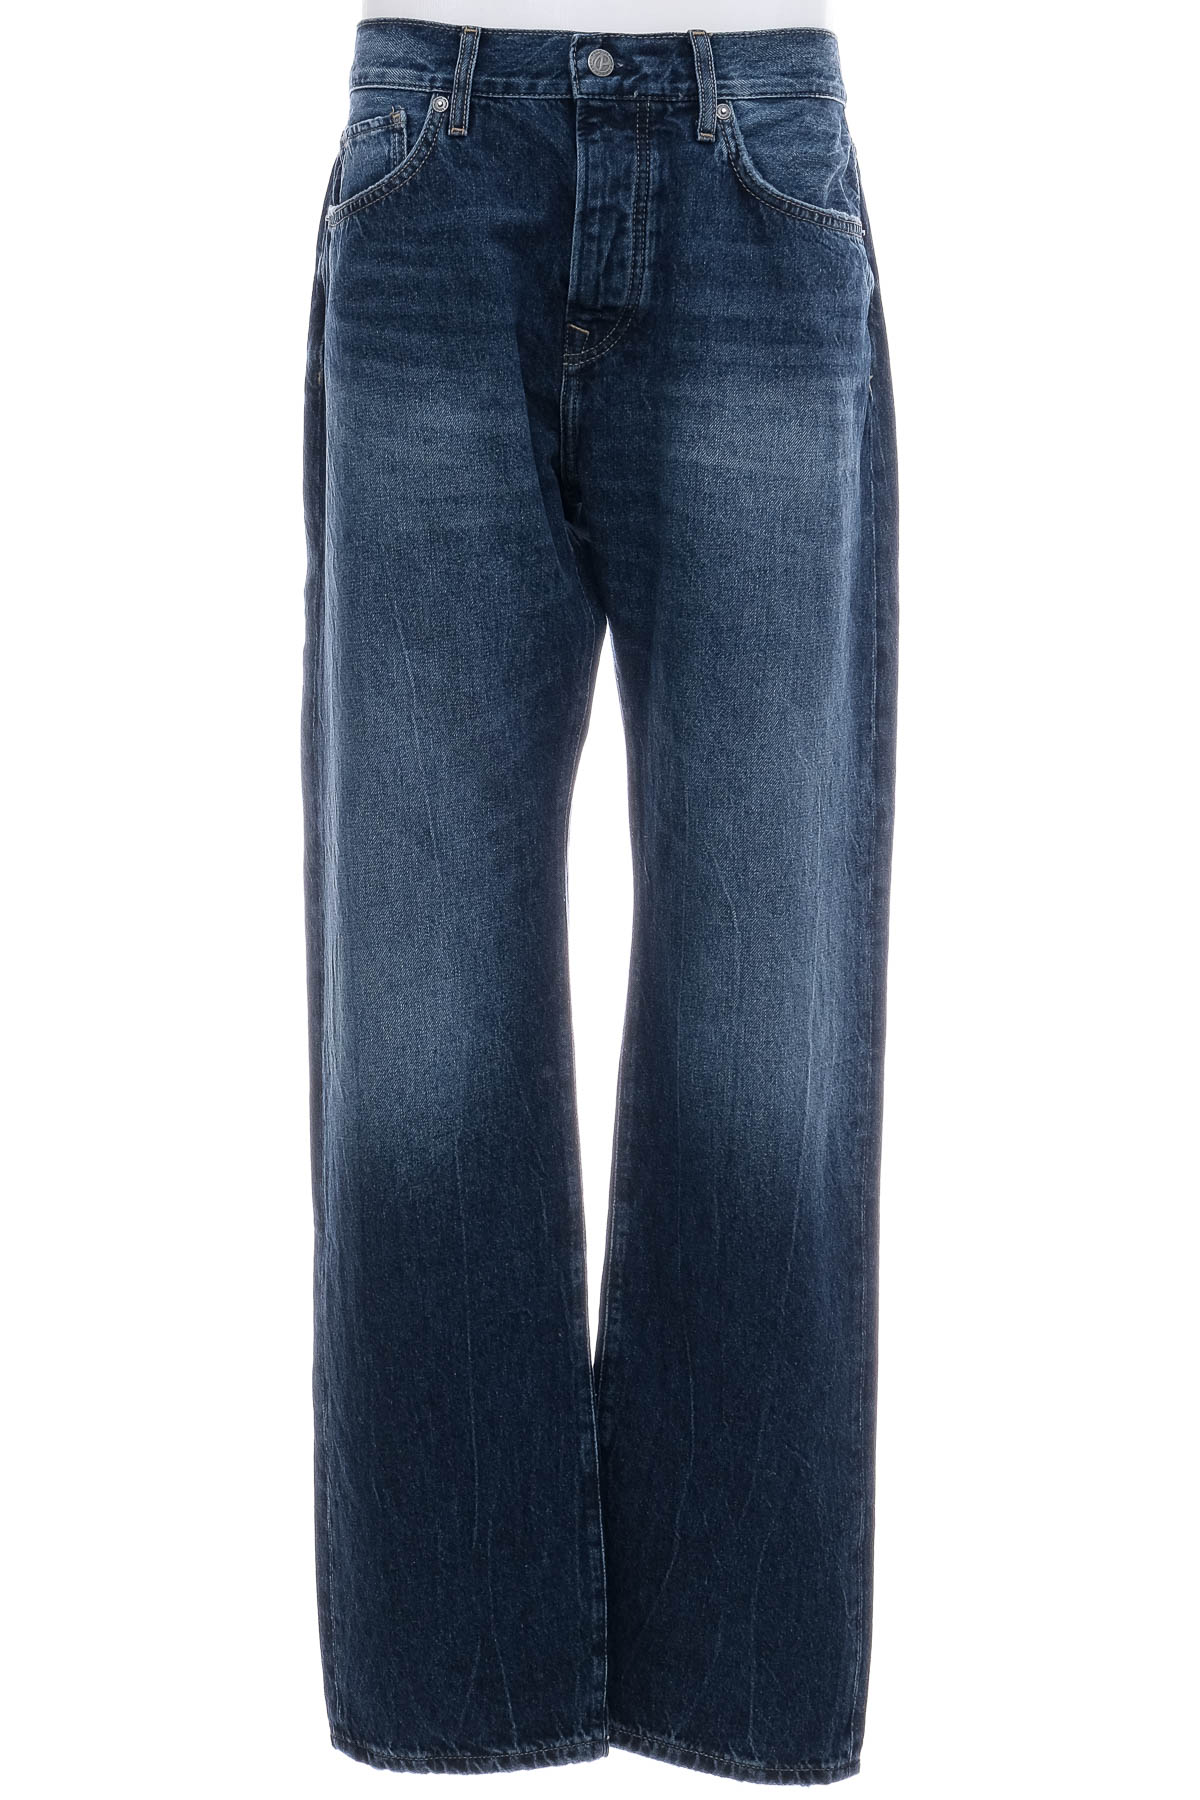 Men's jeans - Pepe Jeans - 0